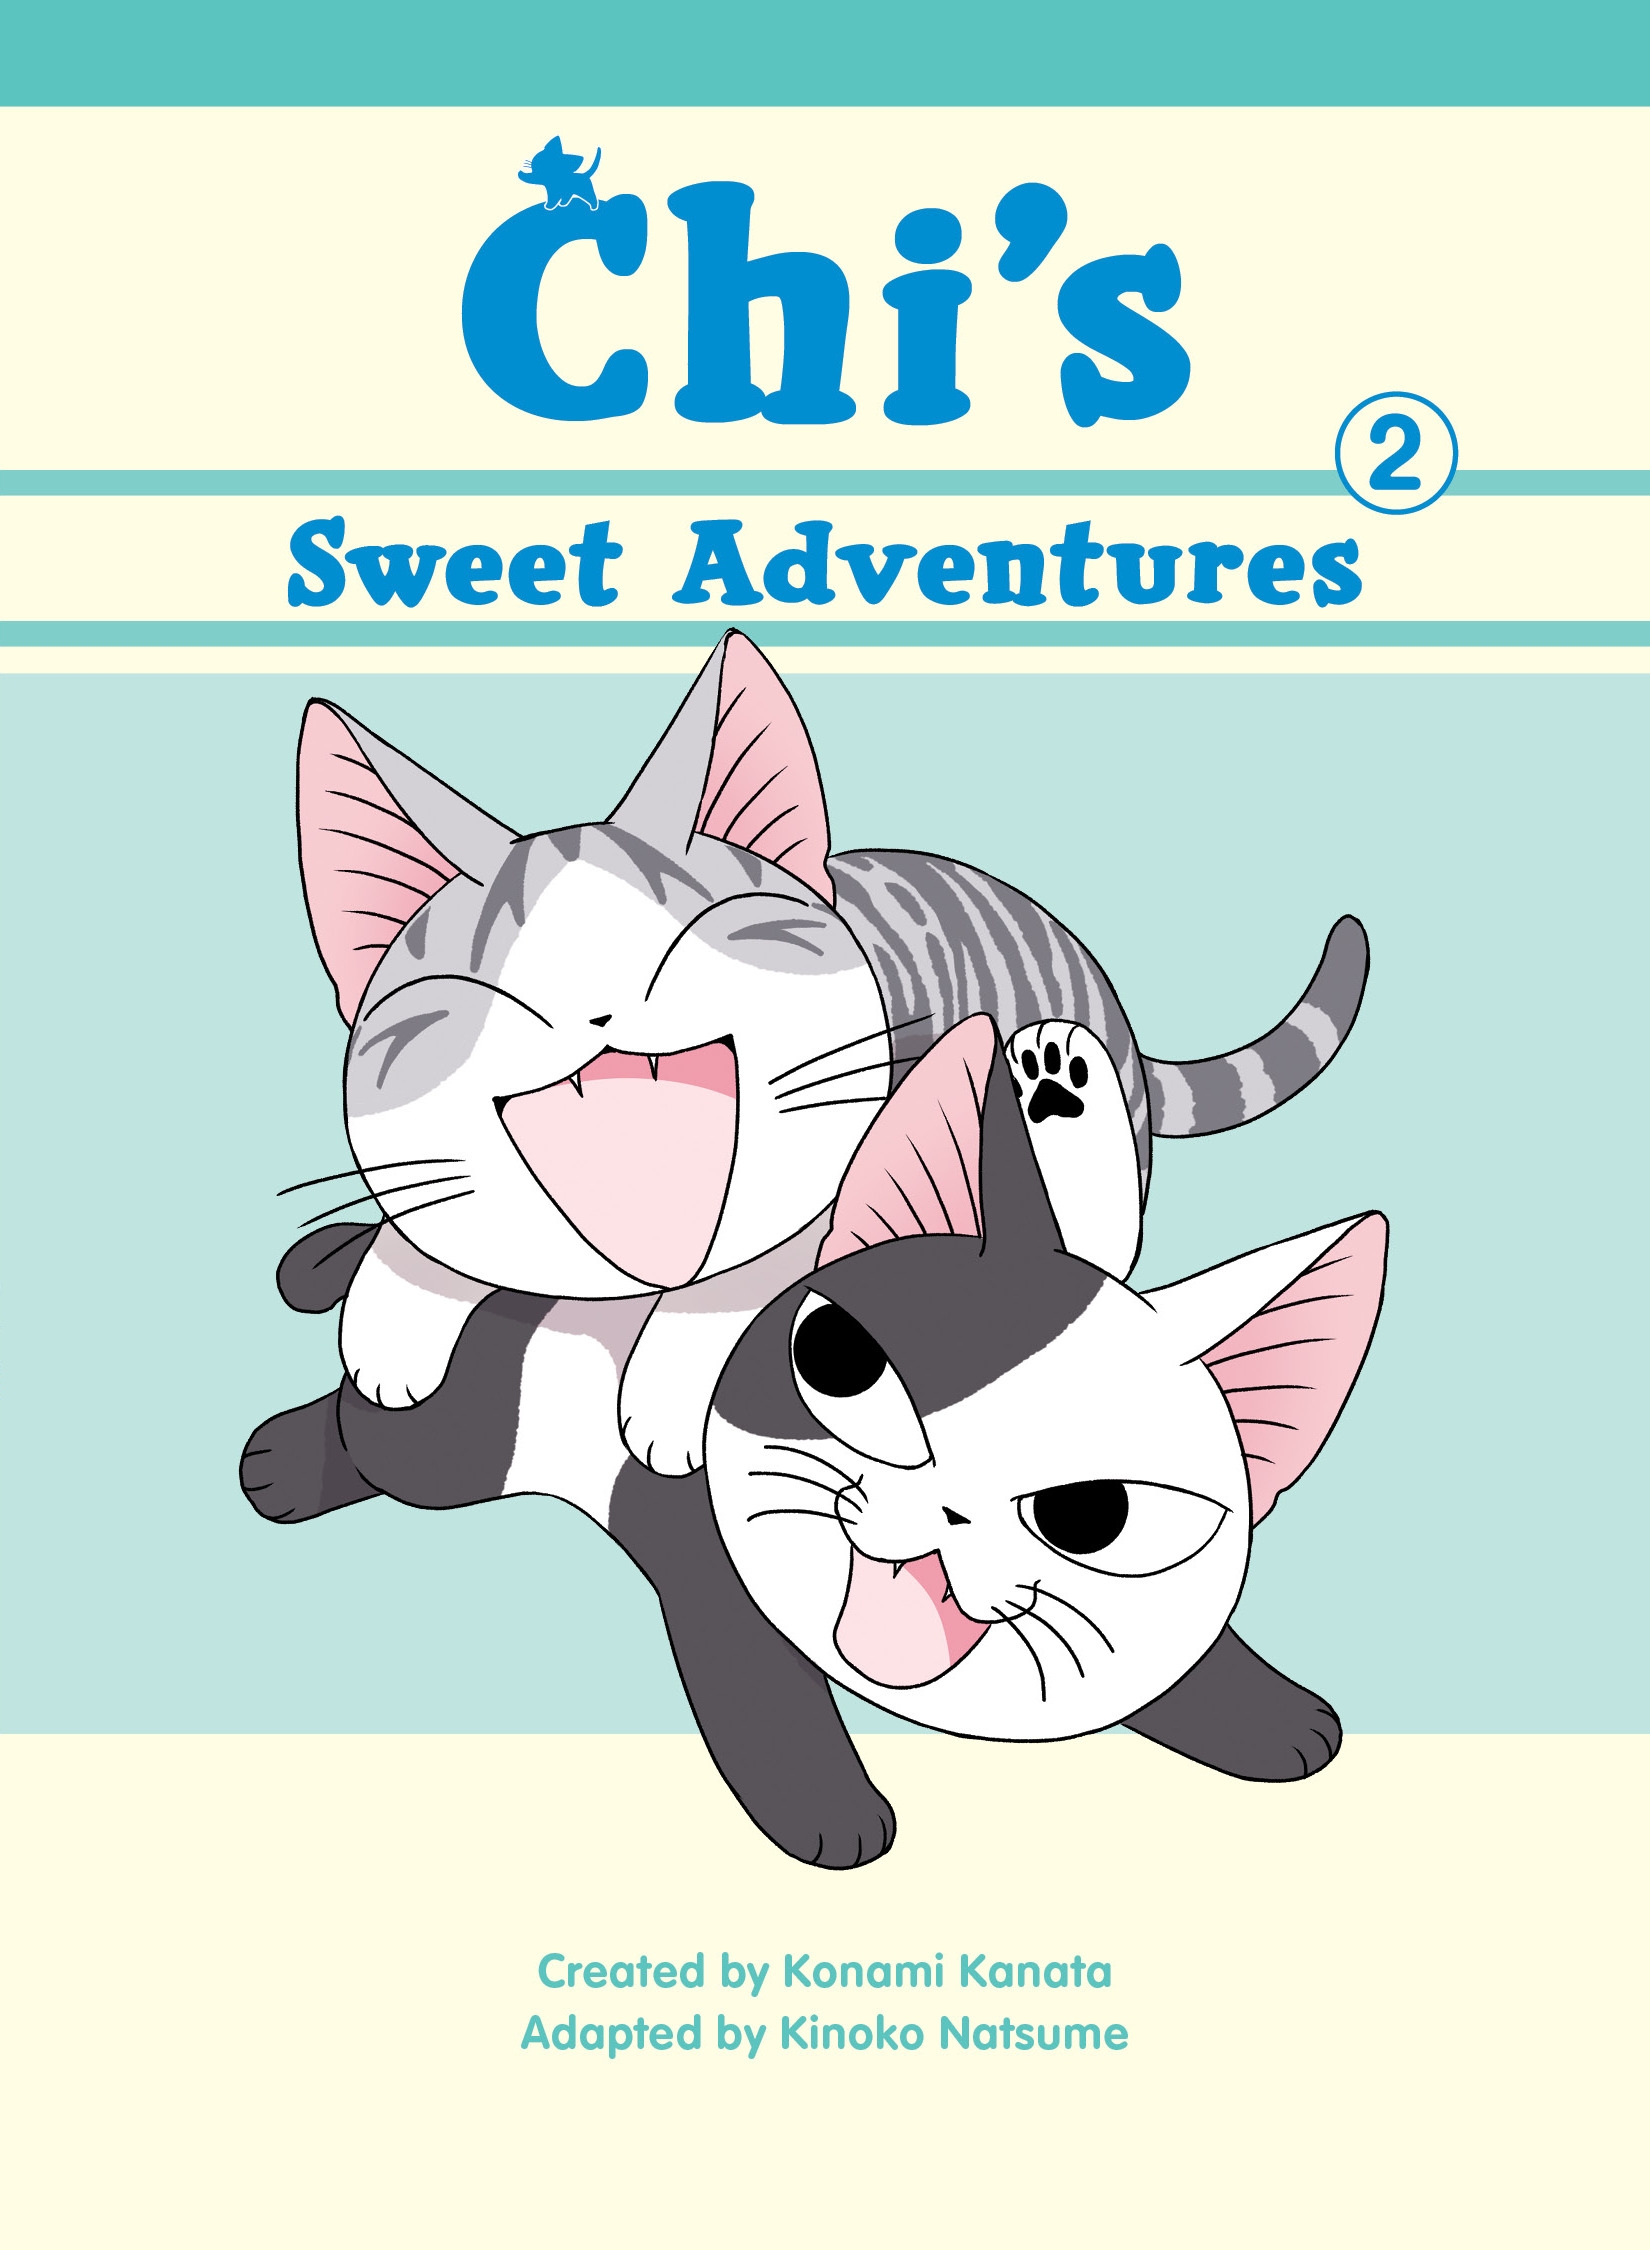 The Complete Chi's Sweet Home 1 by Konami Kanata - Penguin Books